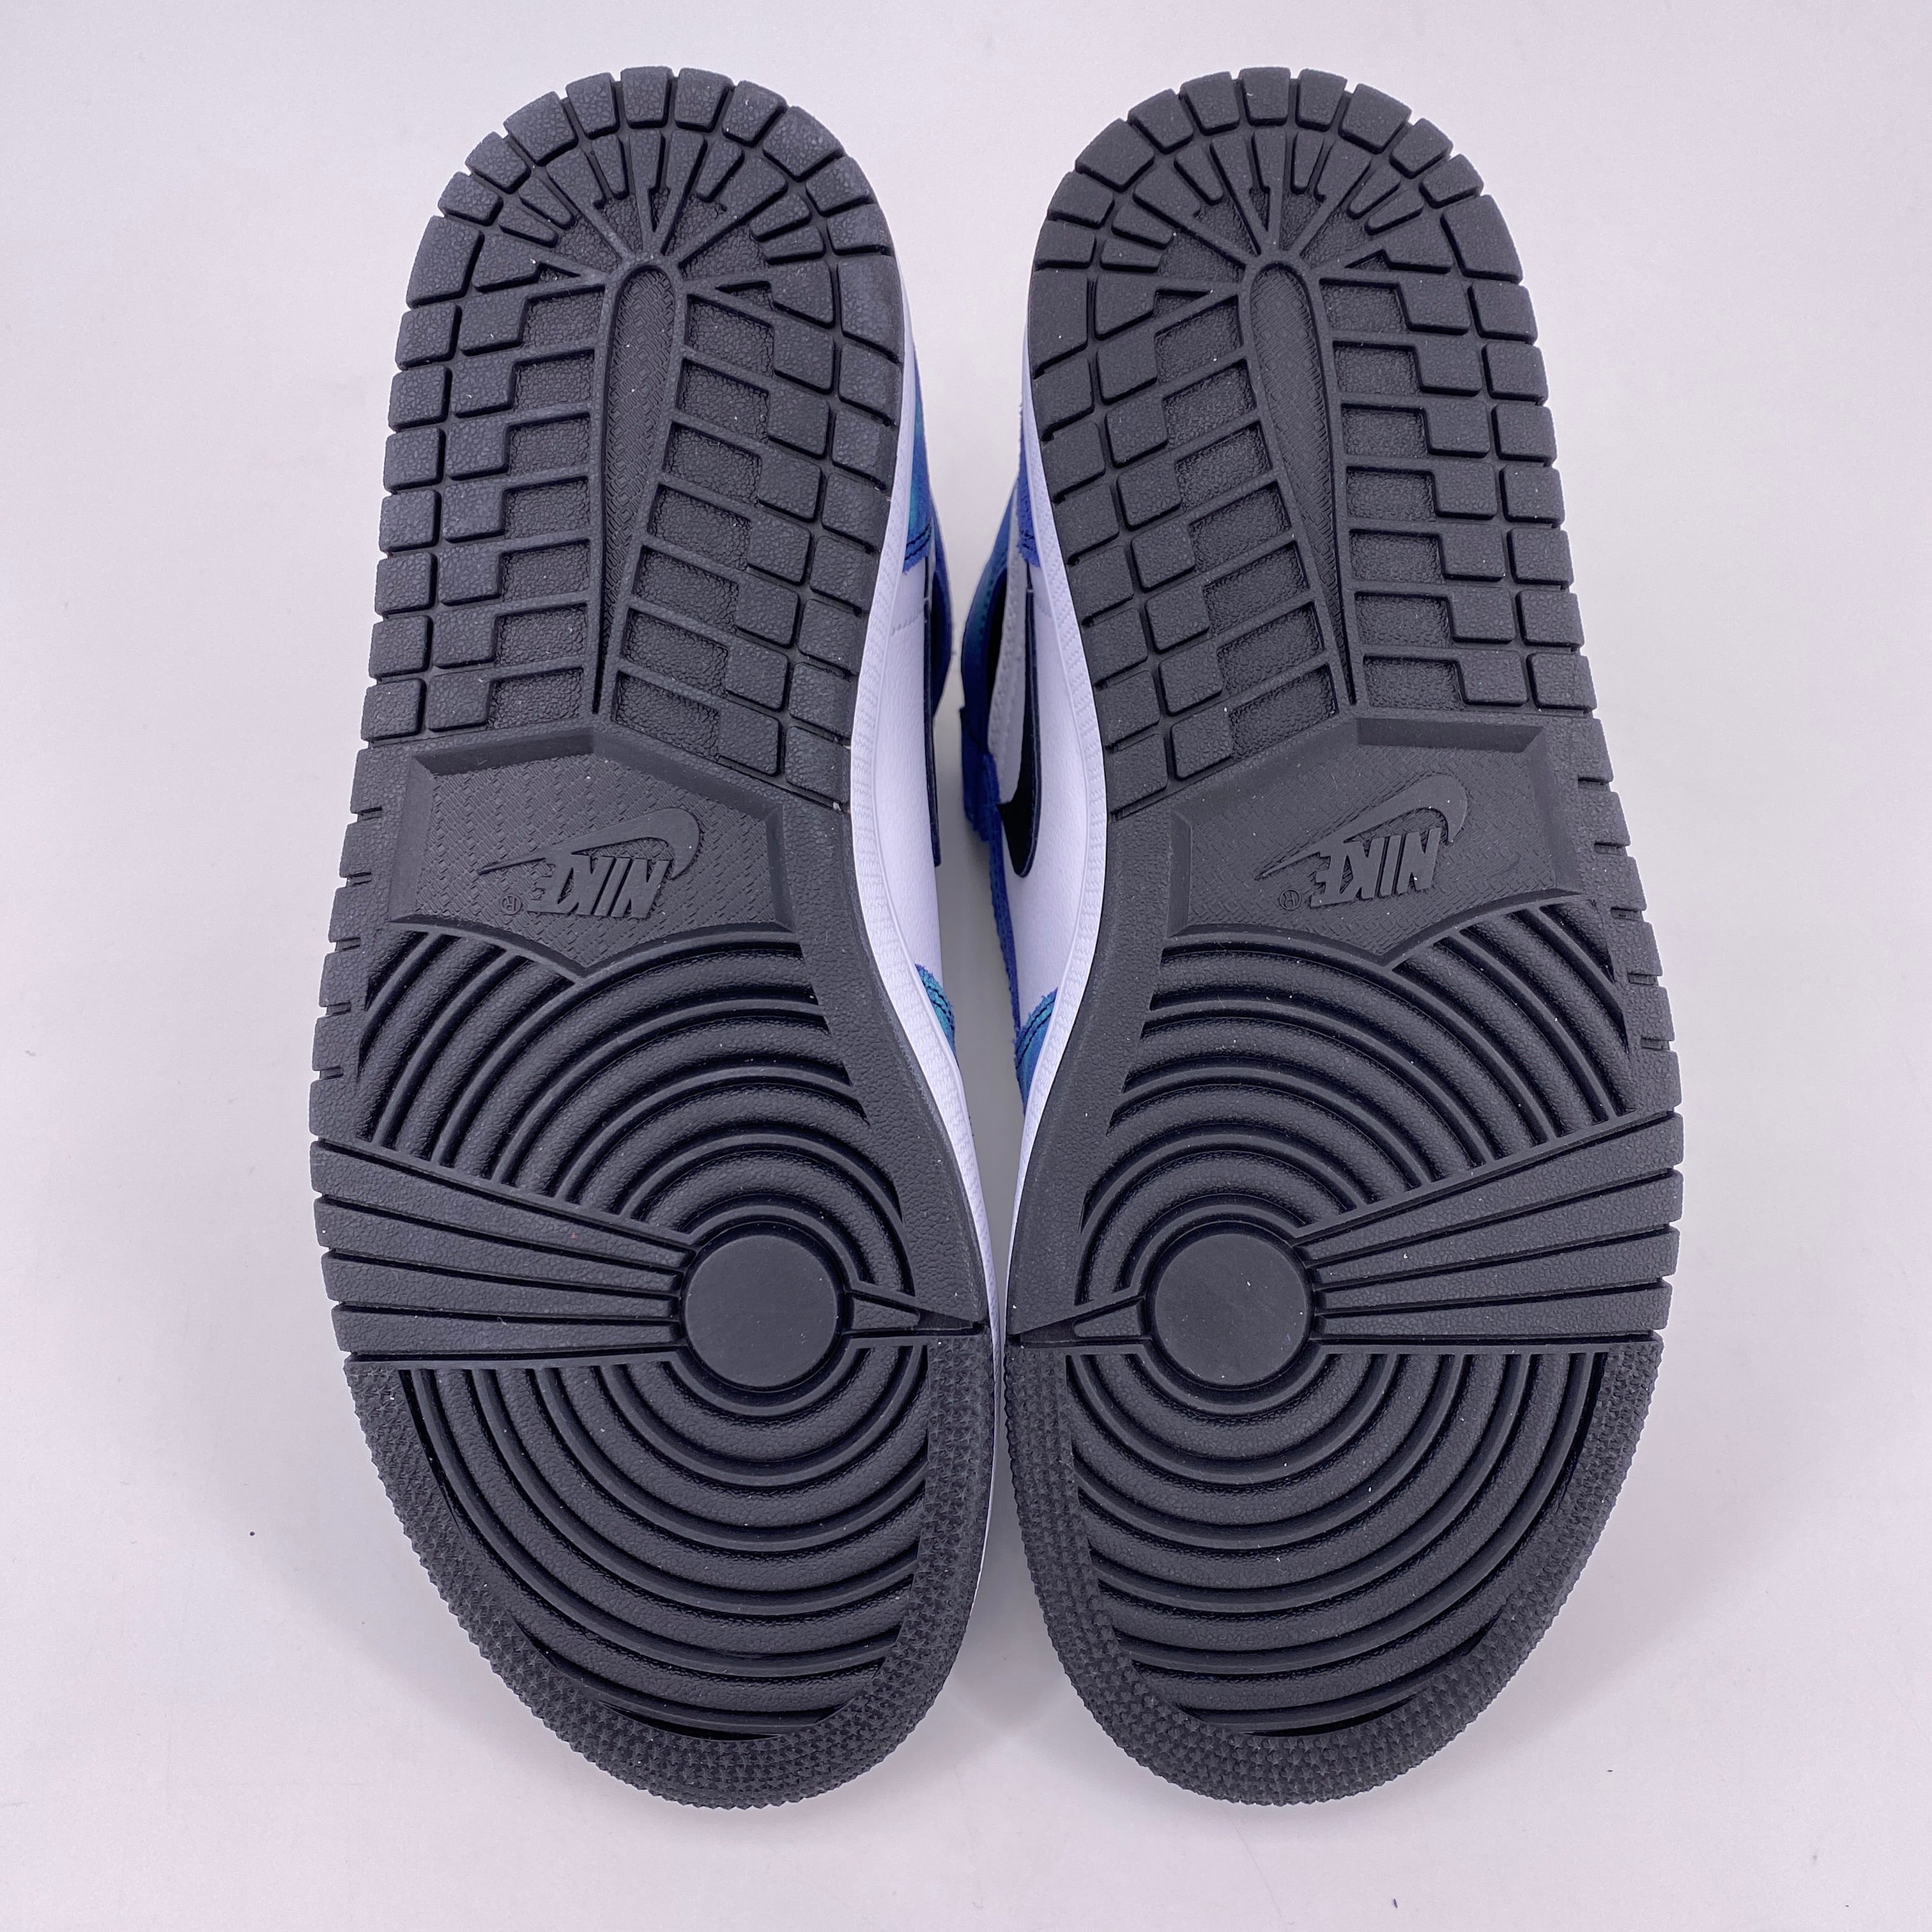 Air Jordan (W) 1 Retro High OG "Tie Dye" 2020 New (Cond) Size 8W